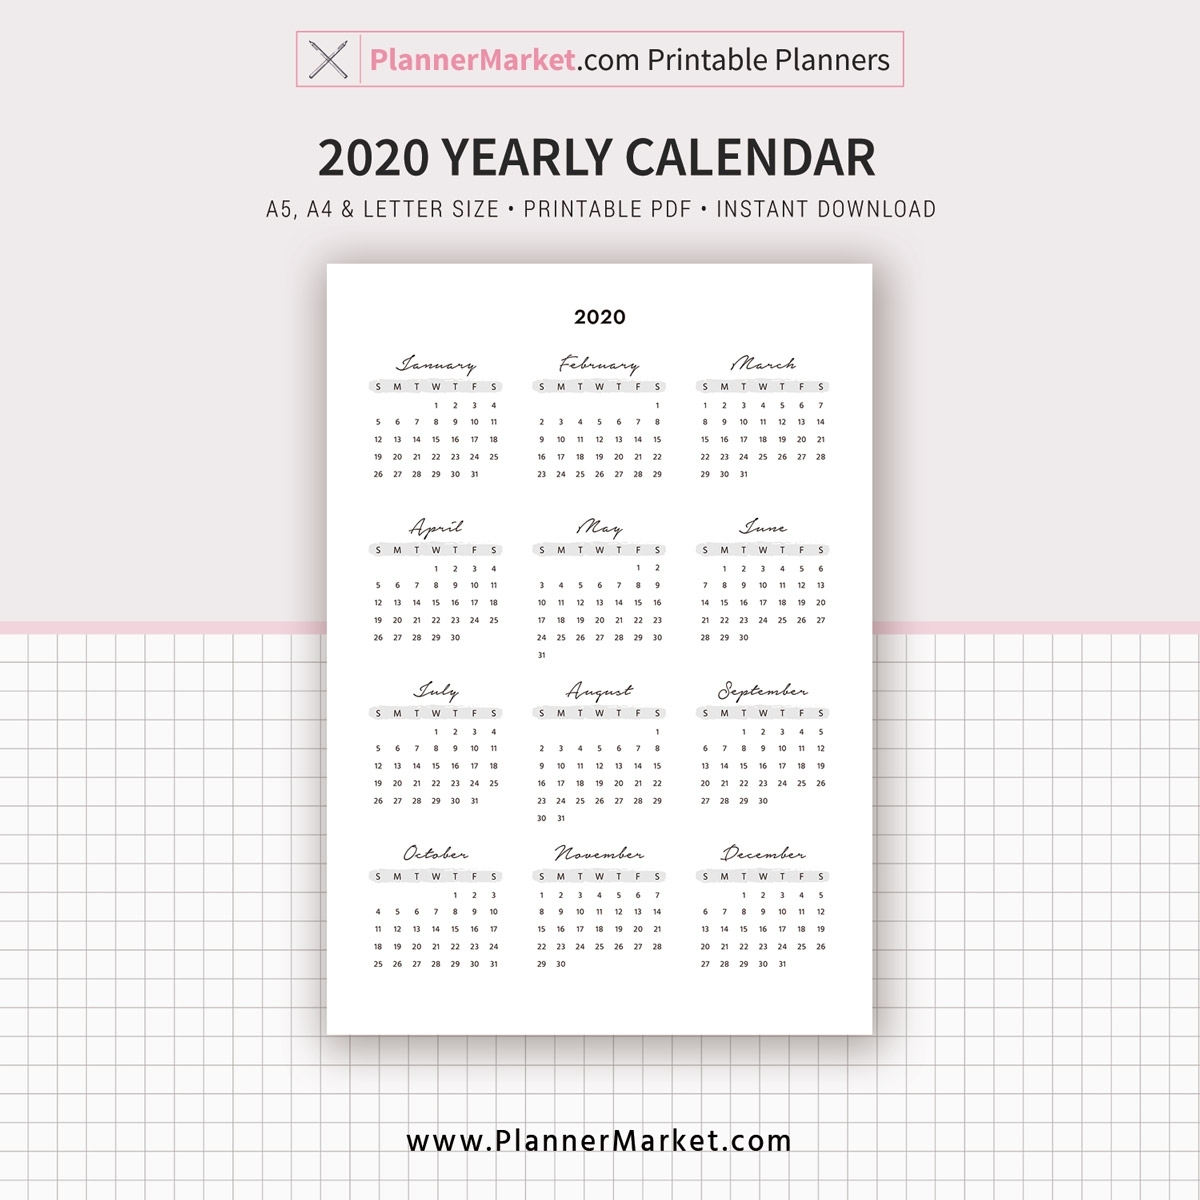 Pick 2021 454 Retail Calendar